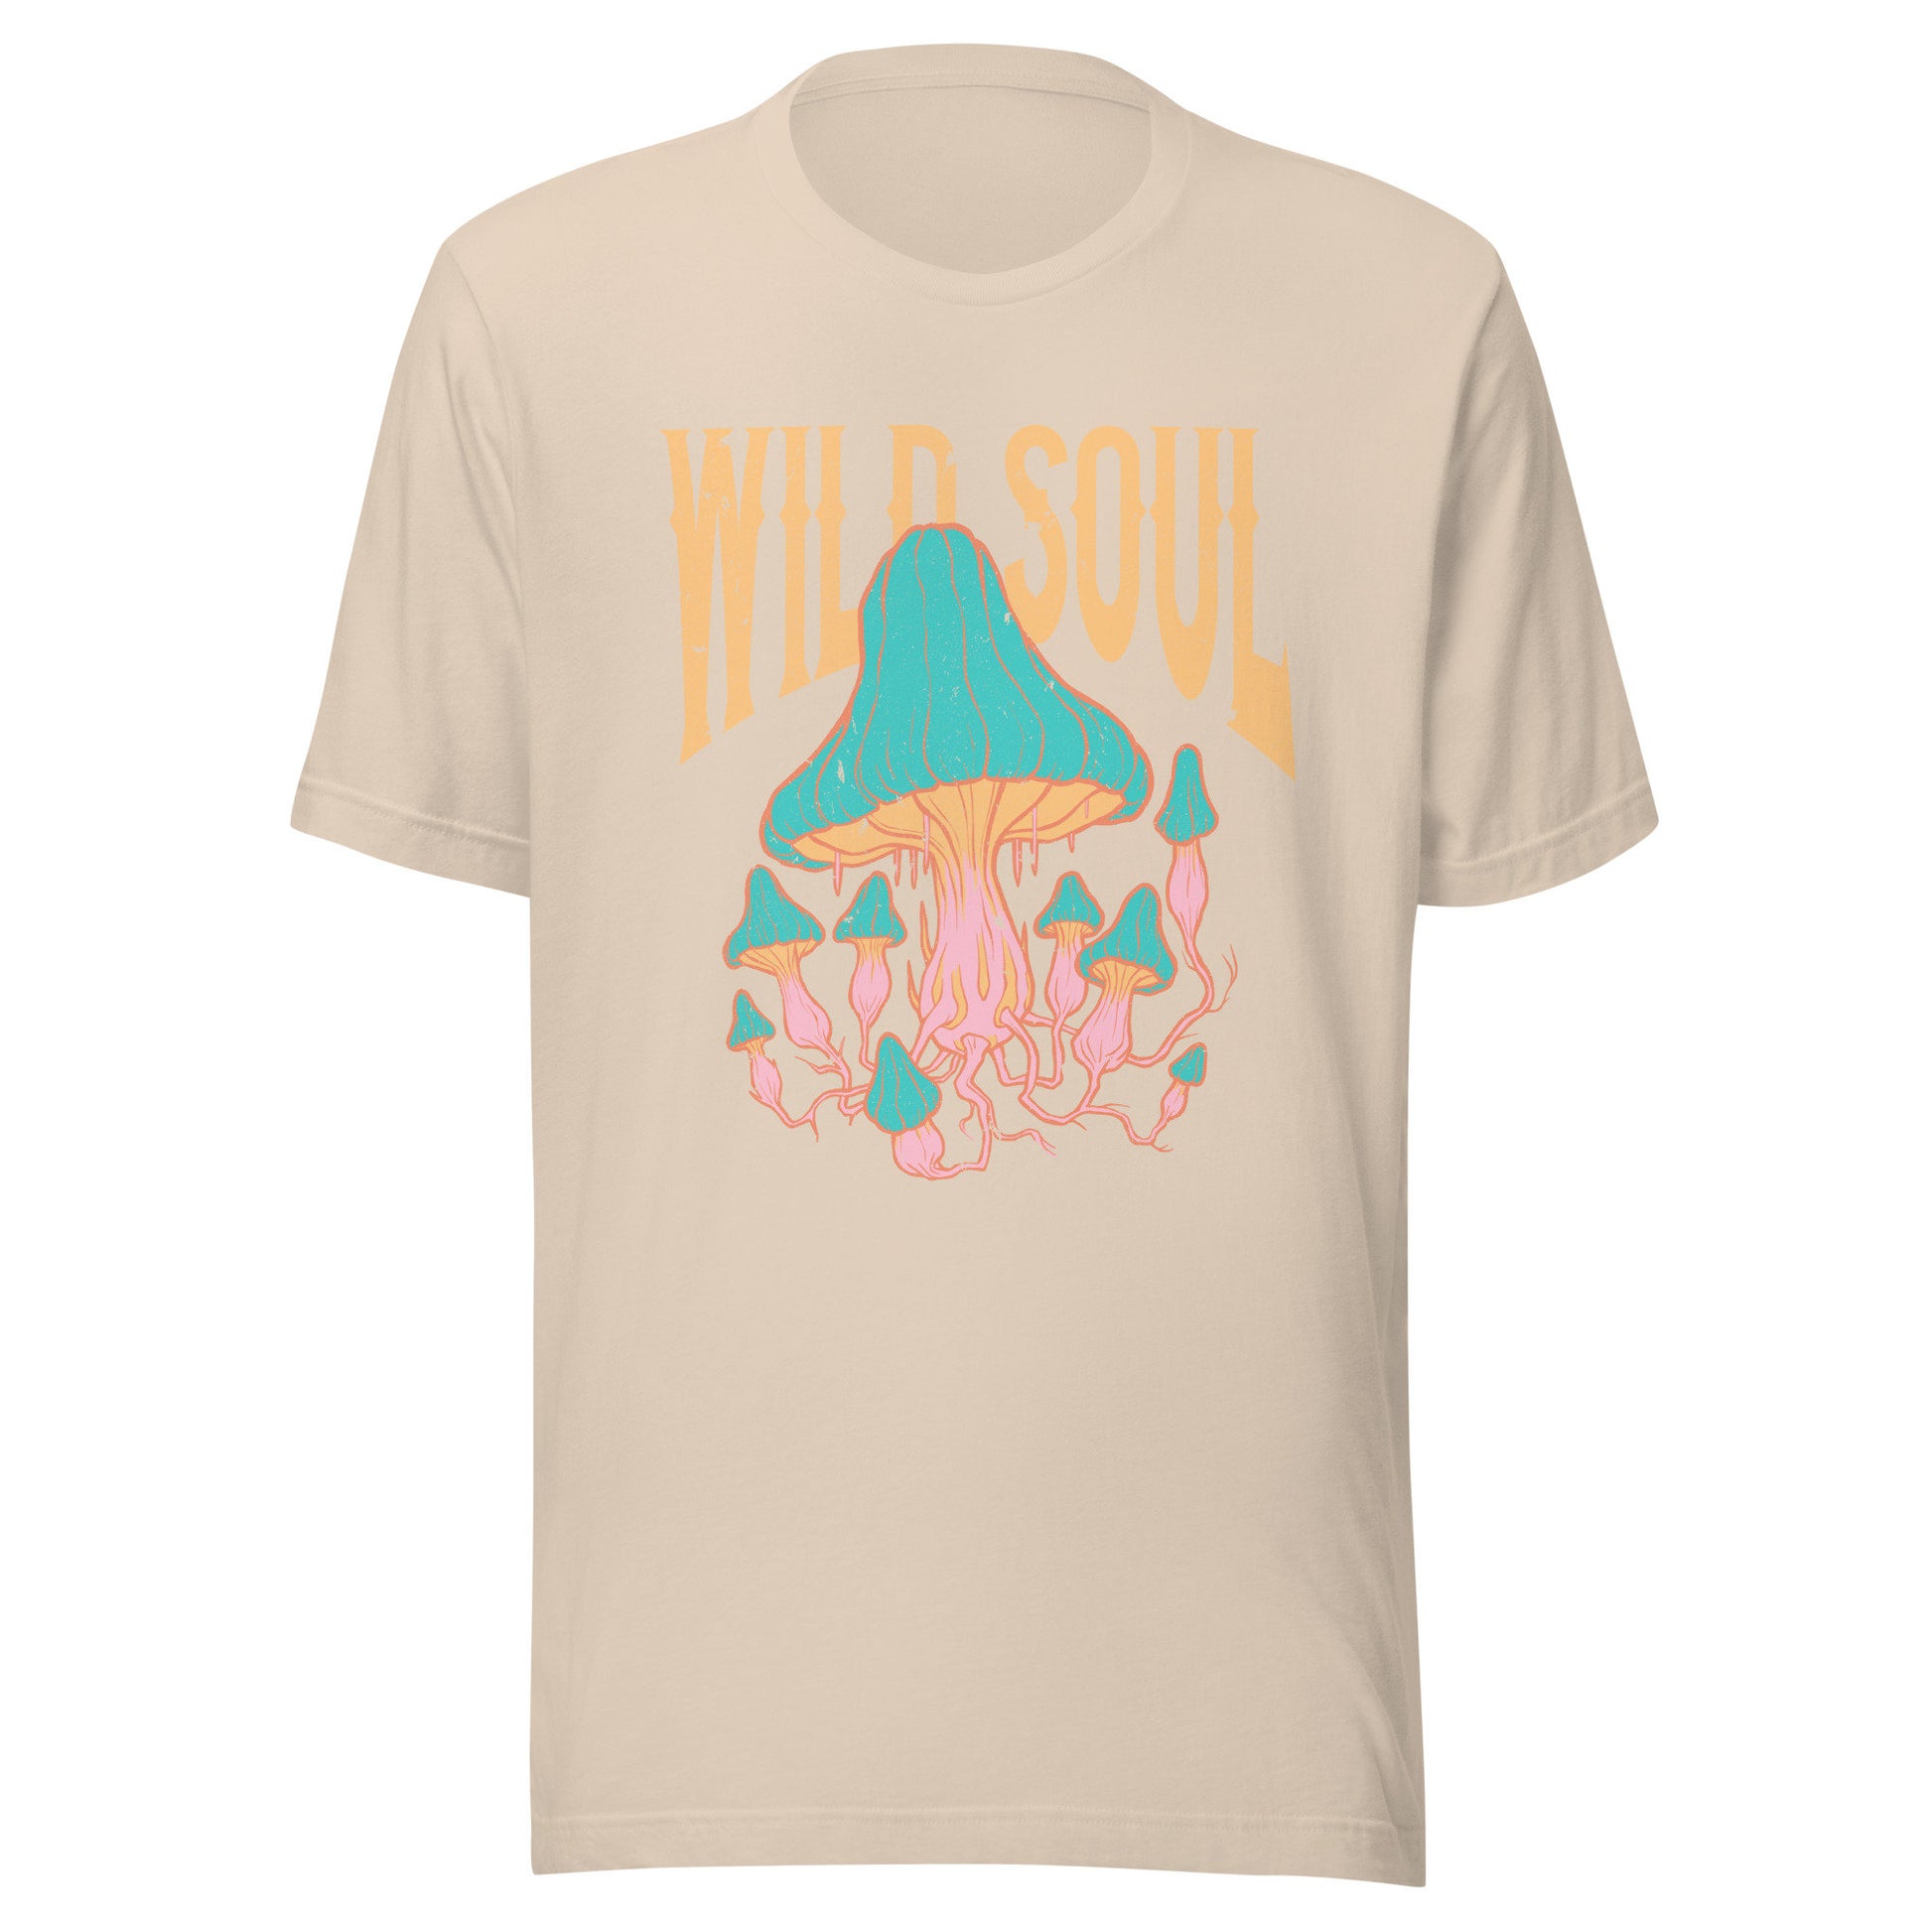 Wild Soul T-Shirt Retro Style T-Shirt, Hippie Mushroom Tee Vintage Inspired Cotton T-Shirt Comfort Colors T-Shirt Oversized Tee